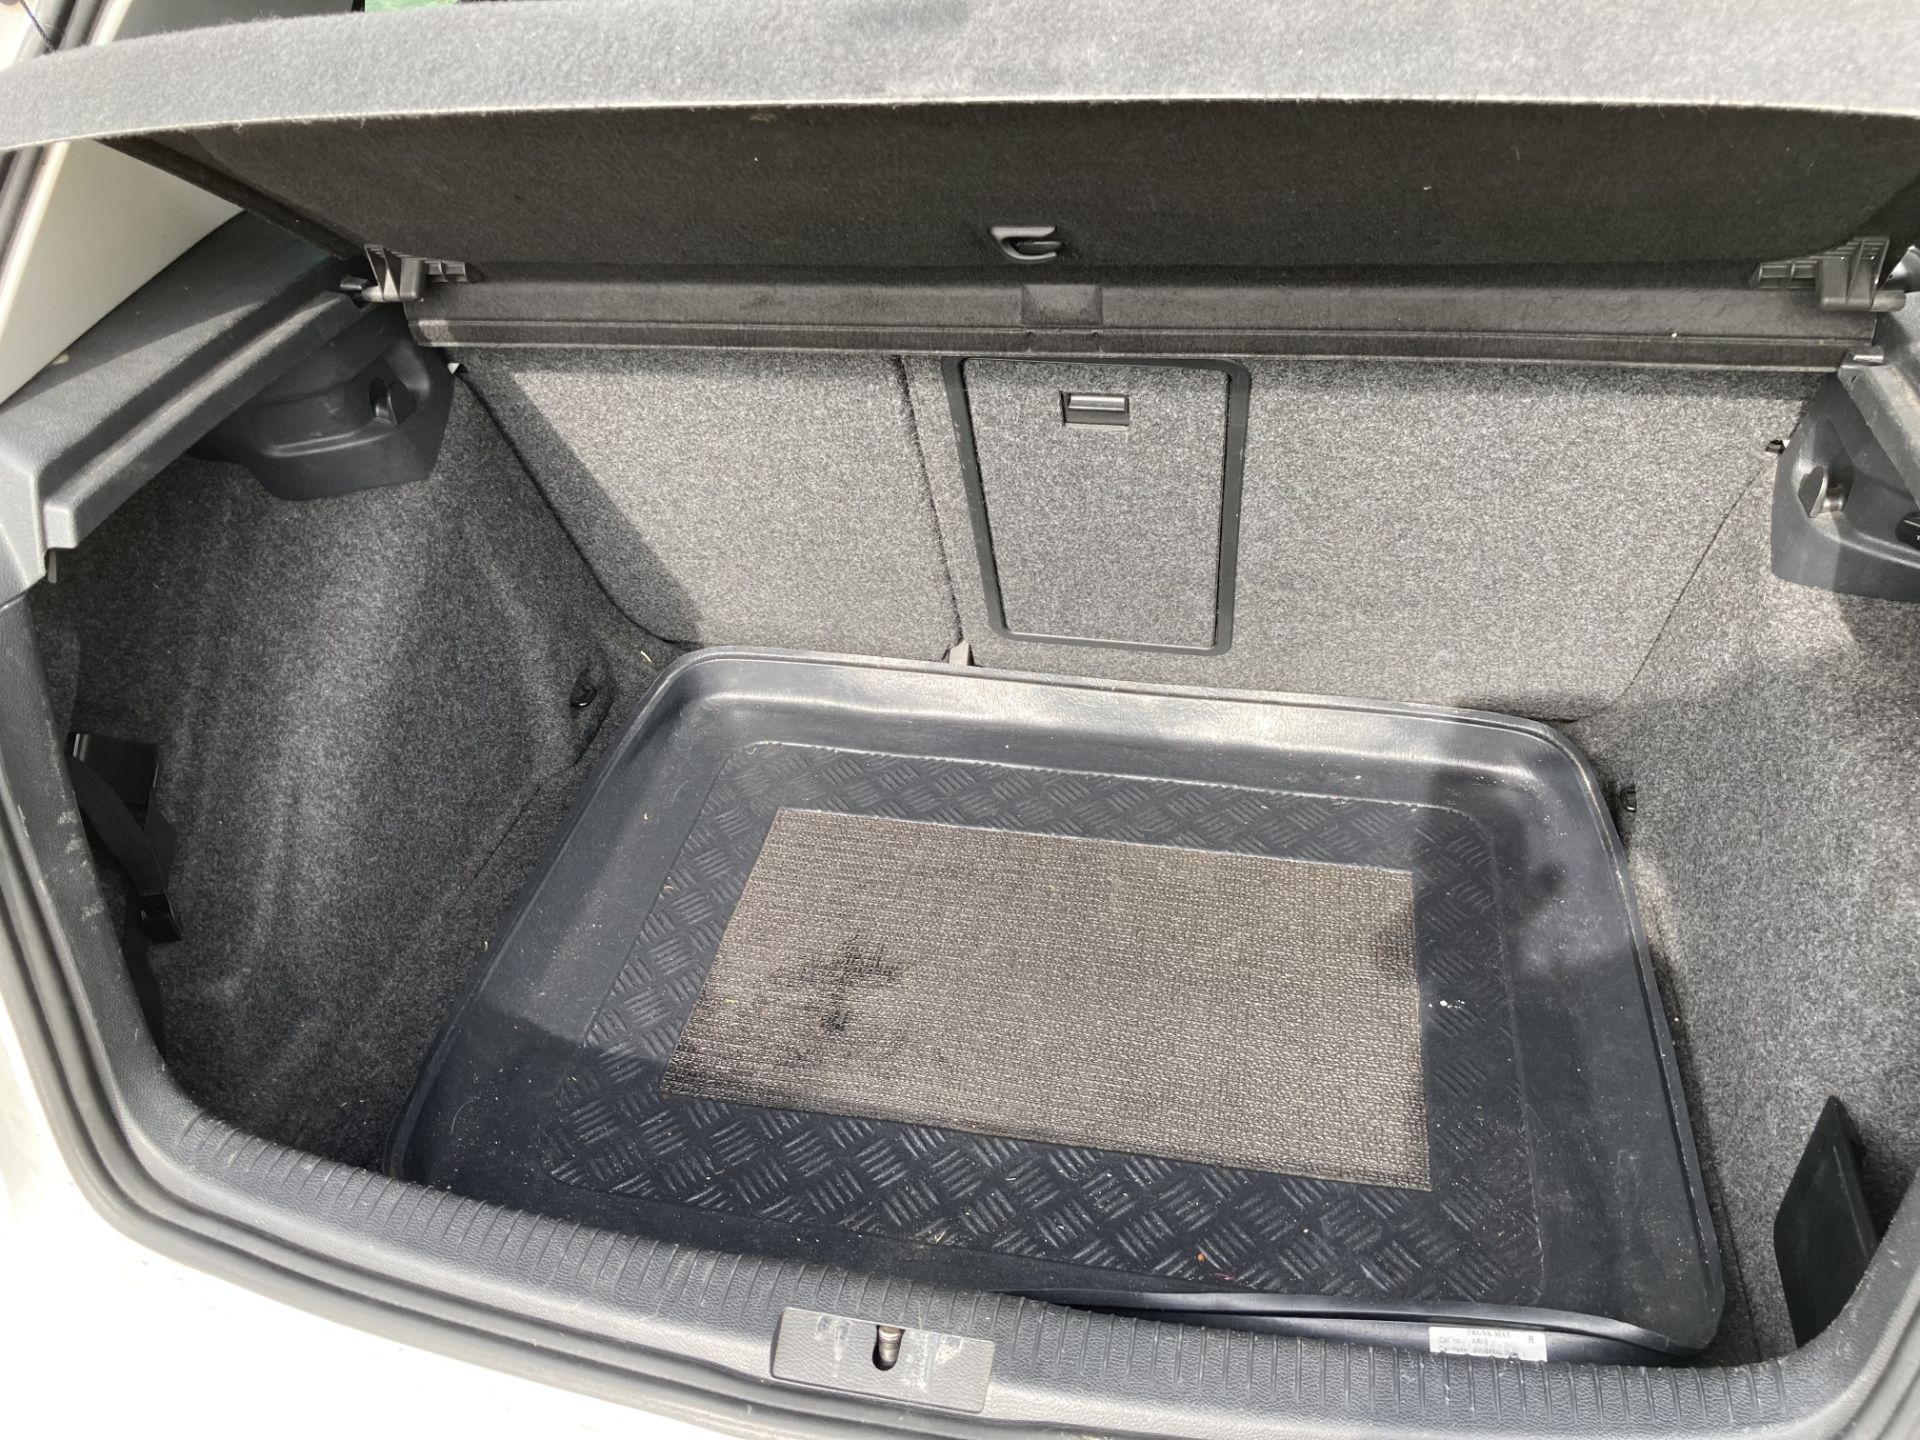 VW GOLF 2.0 TDi FIVE DOOR HATCHBACK - Diesel - WHite - grey cloth interior. - Image 7 of 13